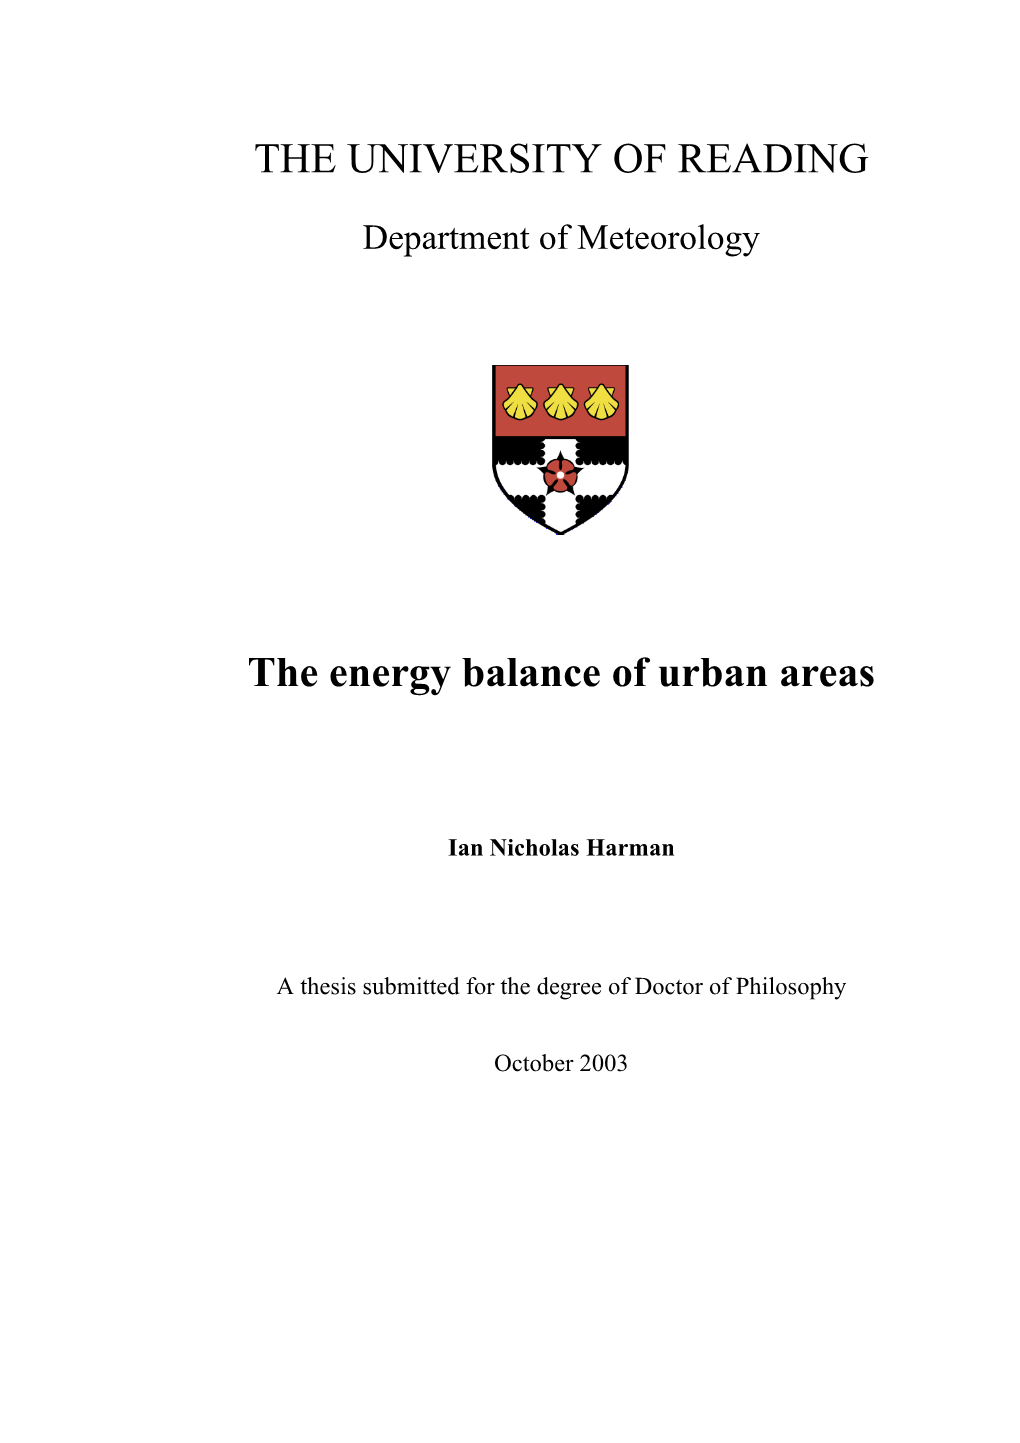 The Energy Balance of Urban Areas